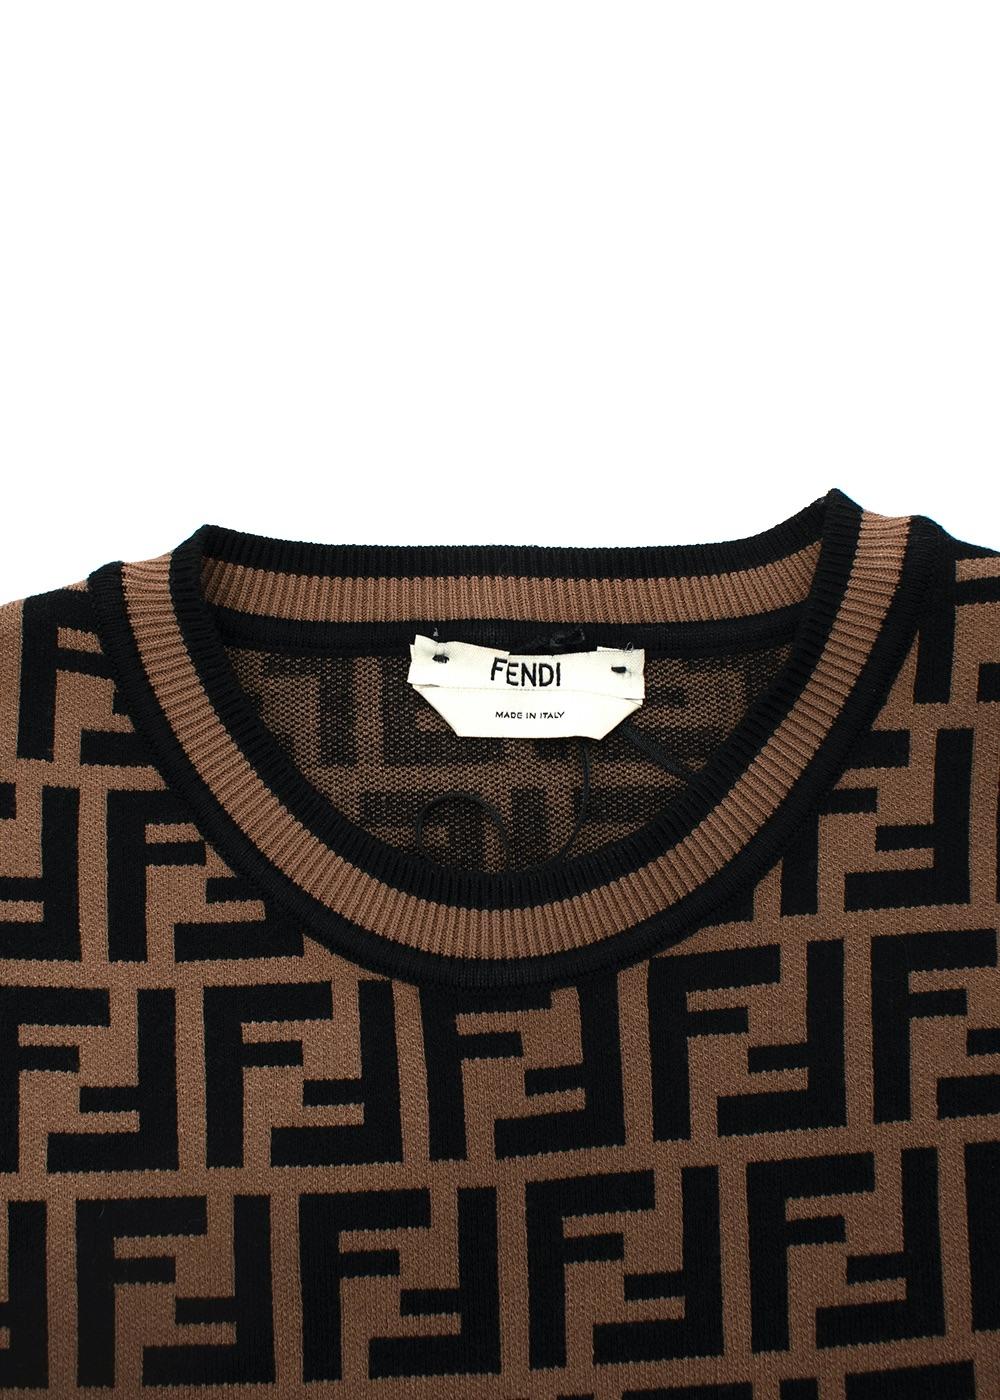 Brown & Black FF Monogram Jacquard Knit Dress For Sale 1